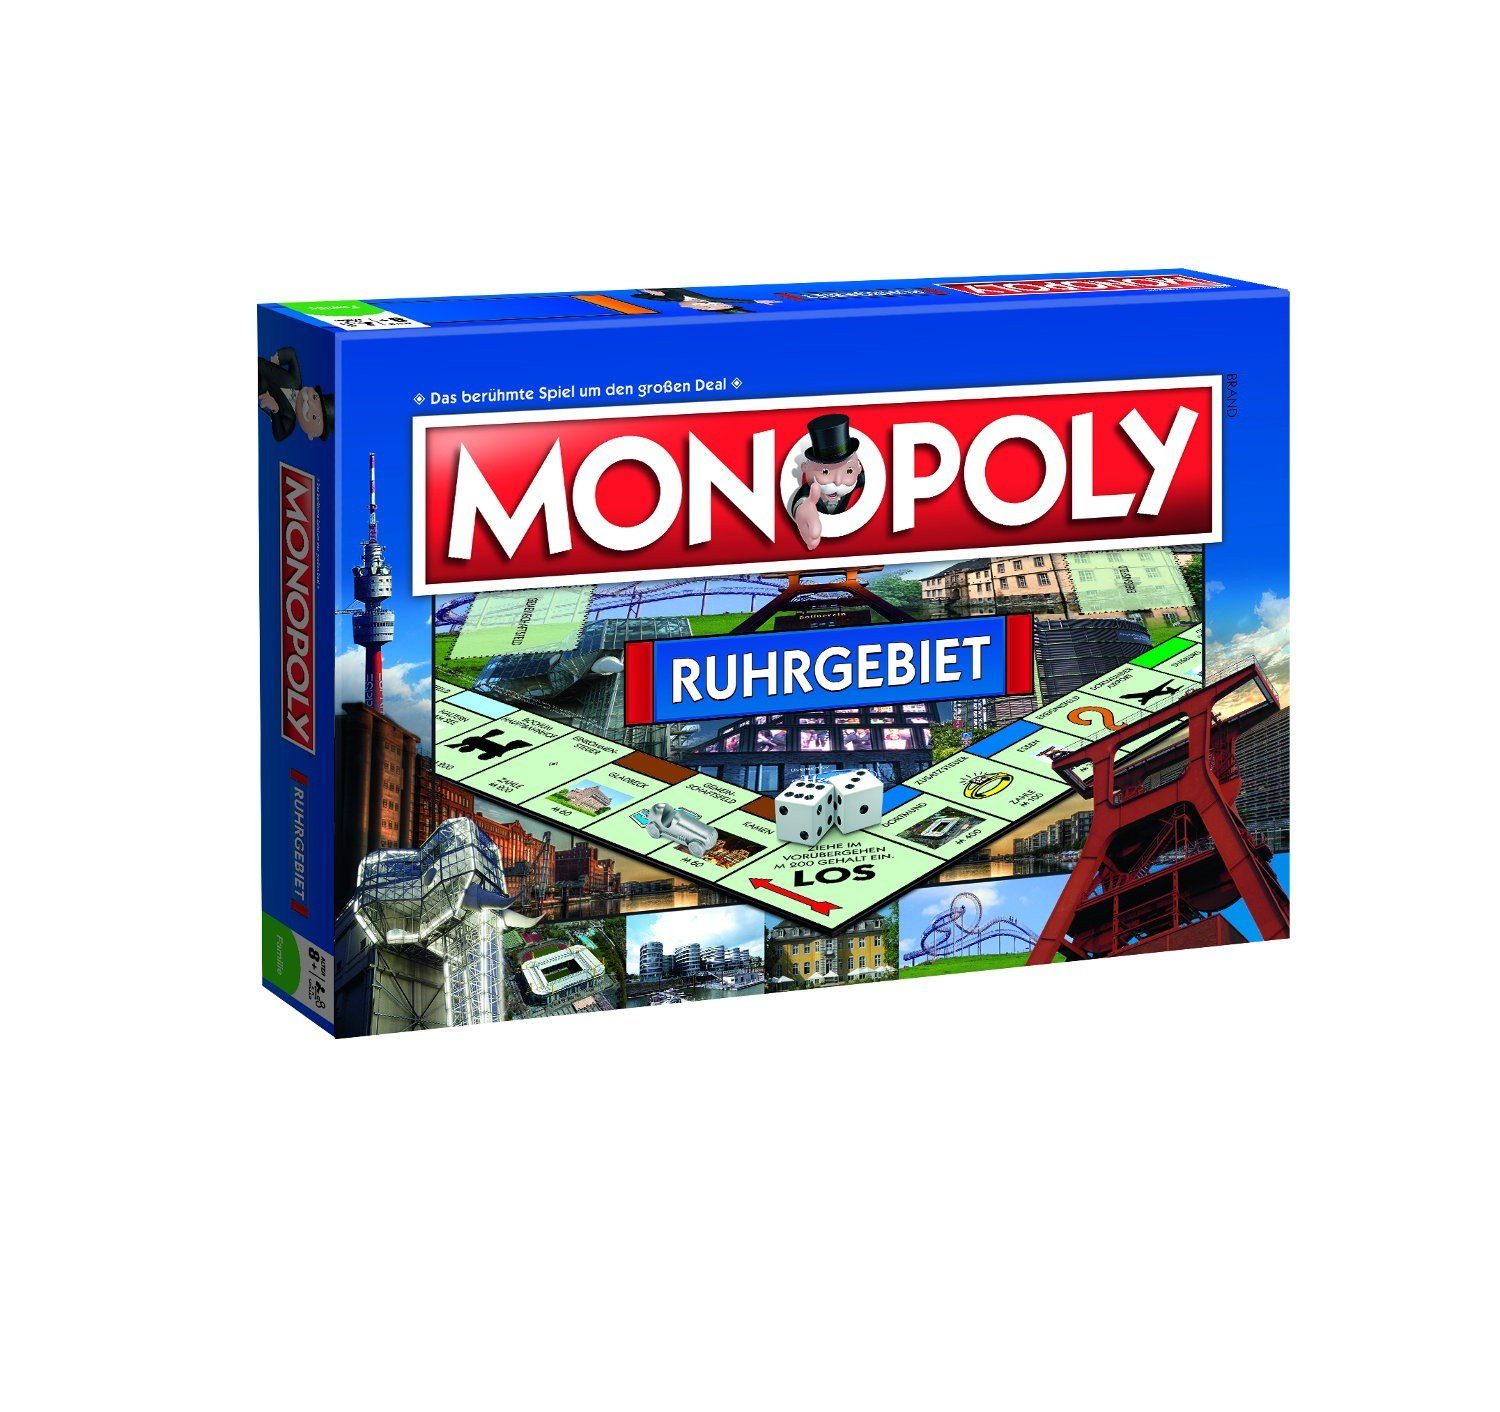 Winning Monopoly Moves Brettspiel Spiel, Ruhrgebiet